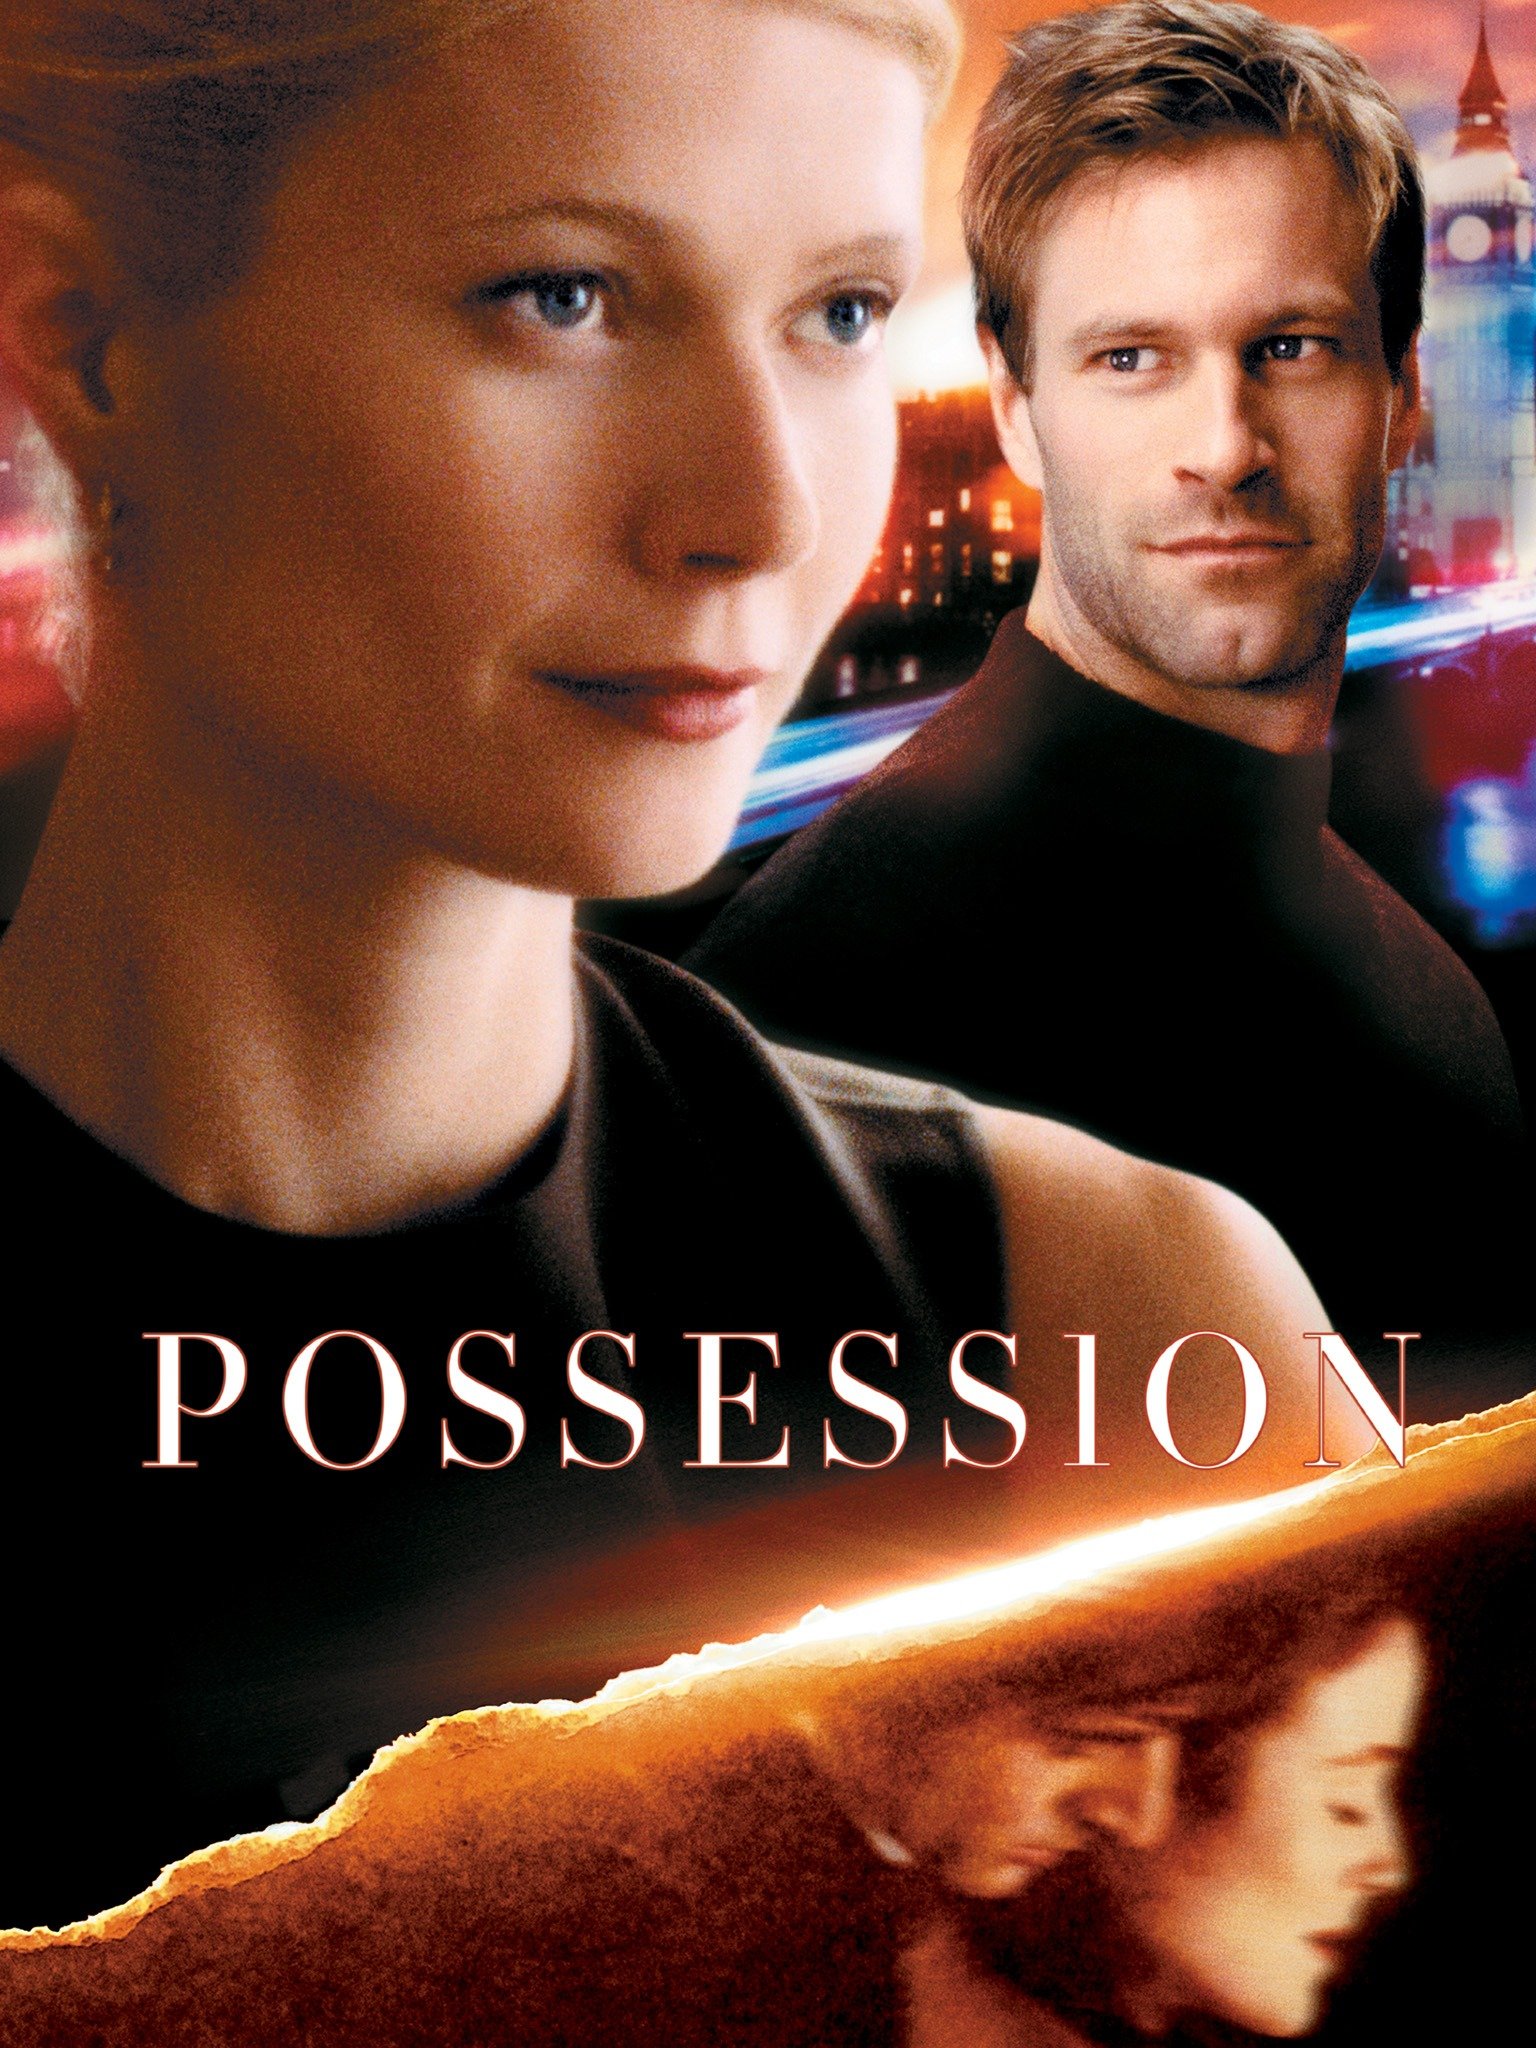 possession-movie-reviews